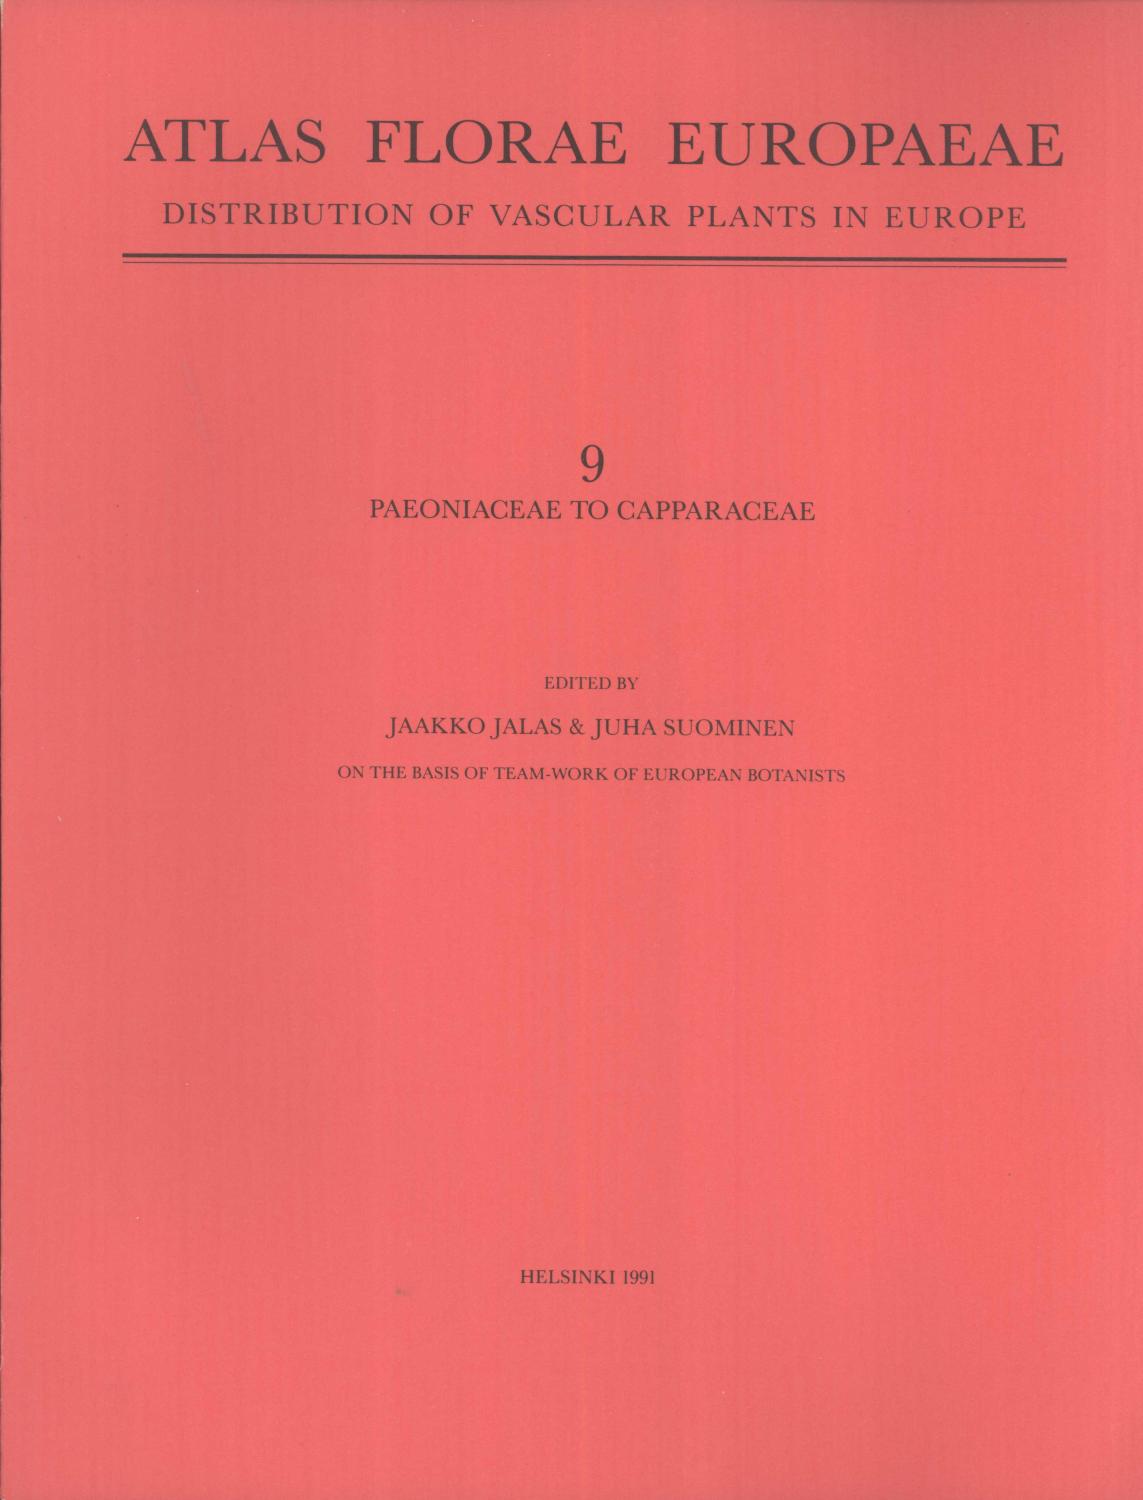 Paeoniaceae to Capparaceae (Atlas Florae Europaeae: Distribution of Vascular Plants in Europe, 9) - Jaako Jalas & Juha Suominen (editors)